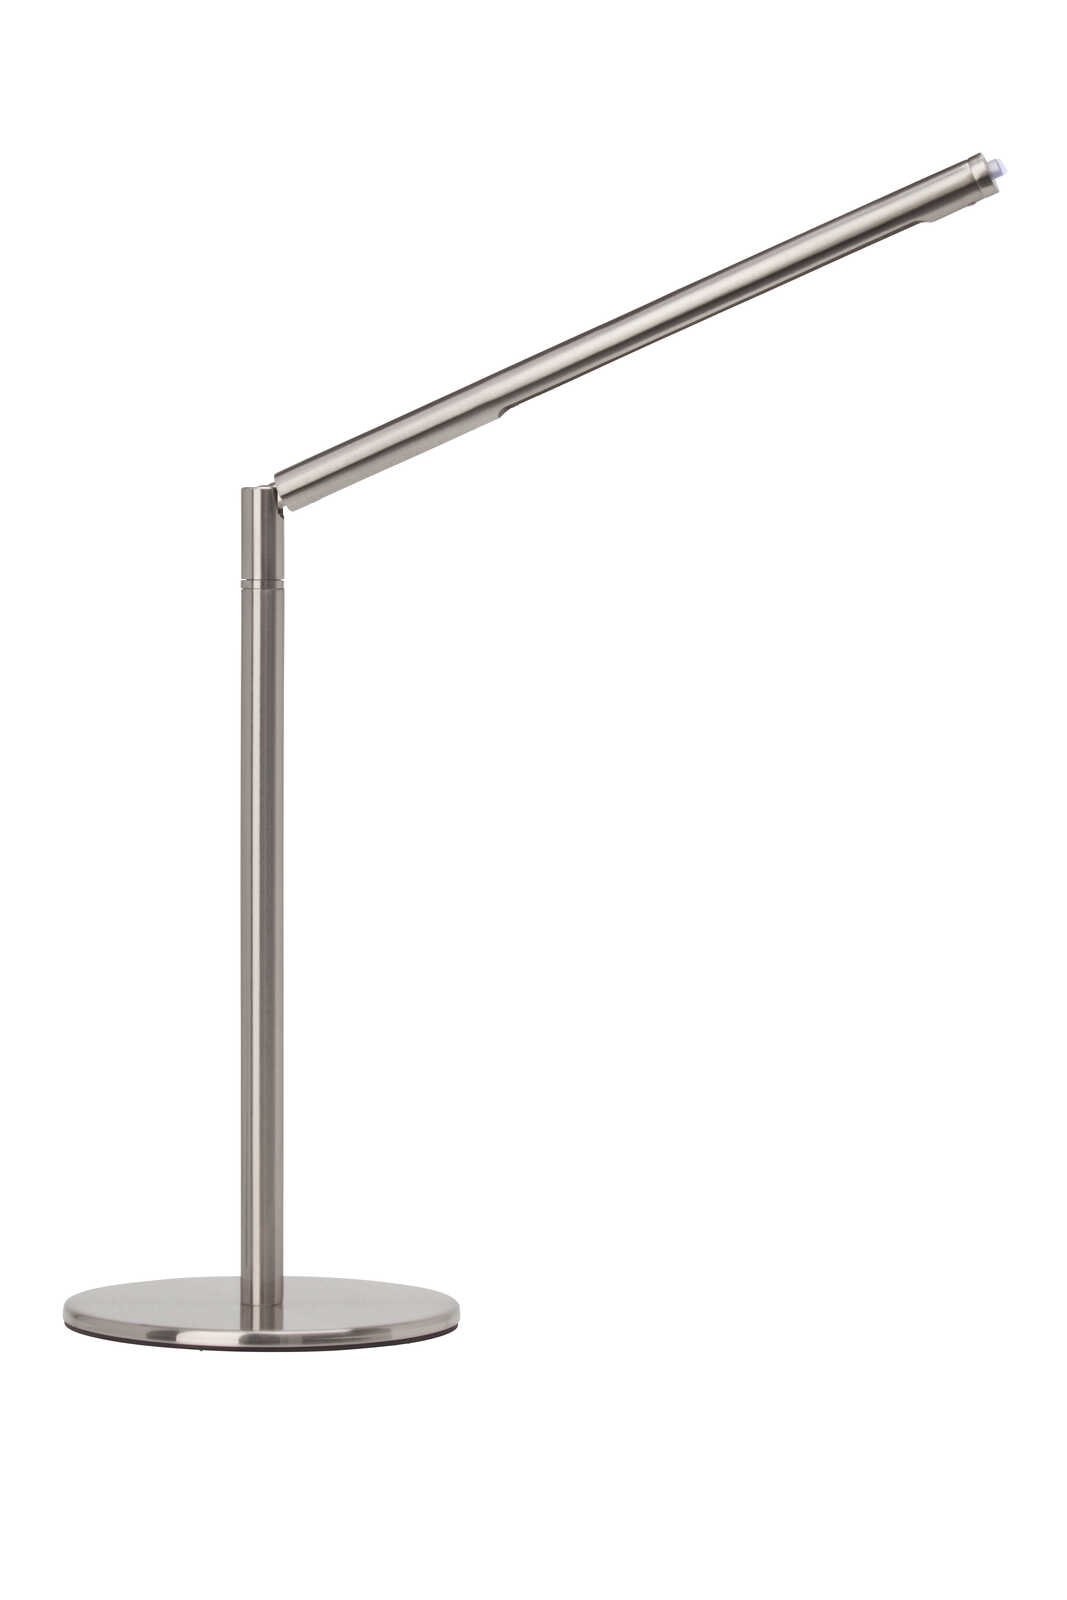             Lámpara de mesa de metal - Carlotta - Metallic
        